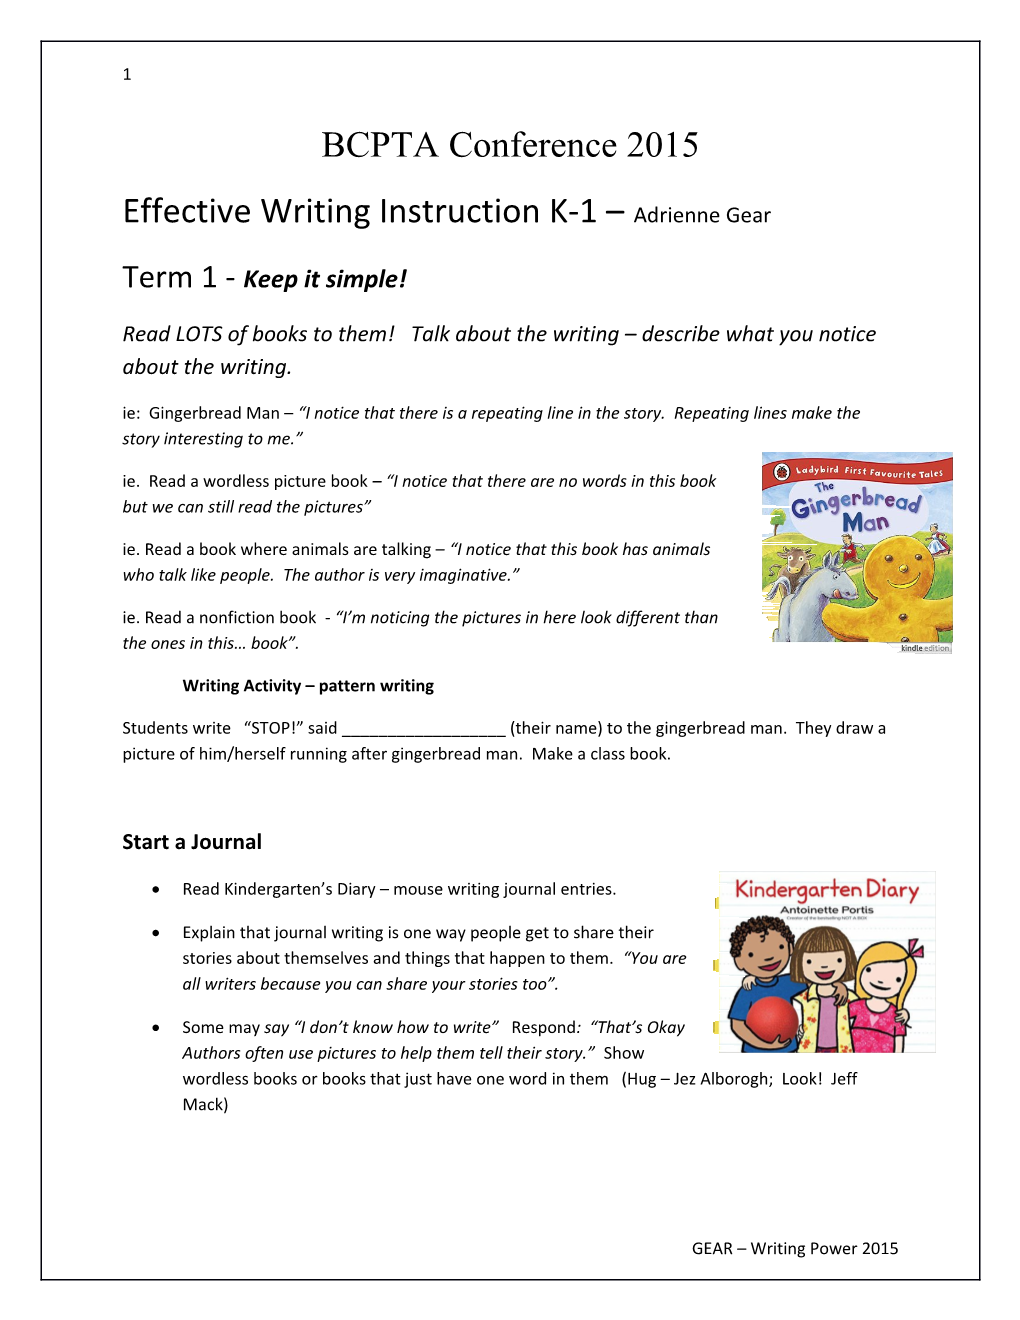 Effective Writing Instruction K-1 Adrienne Gear